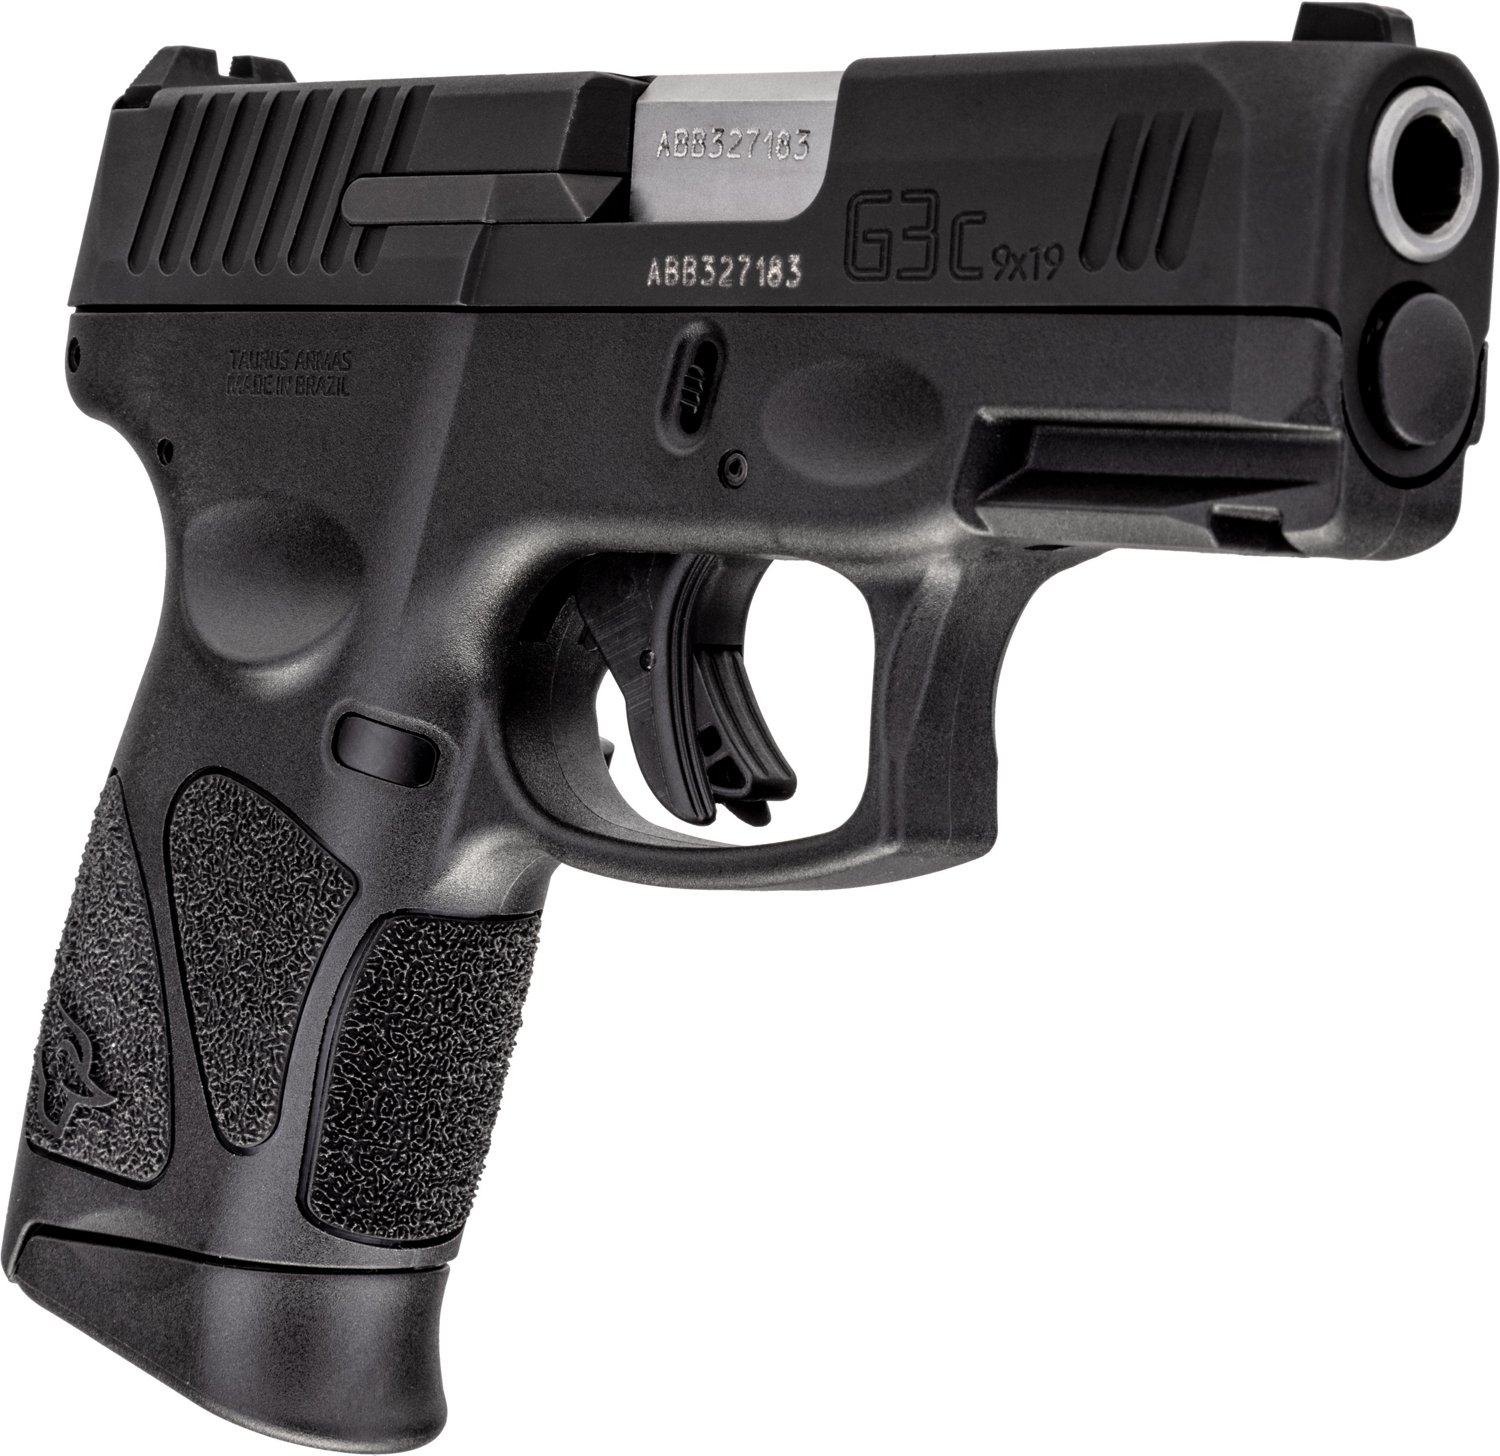 Taurus G3C 9mm Pistol                                                                                                            - view number 3